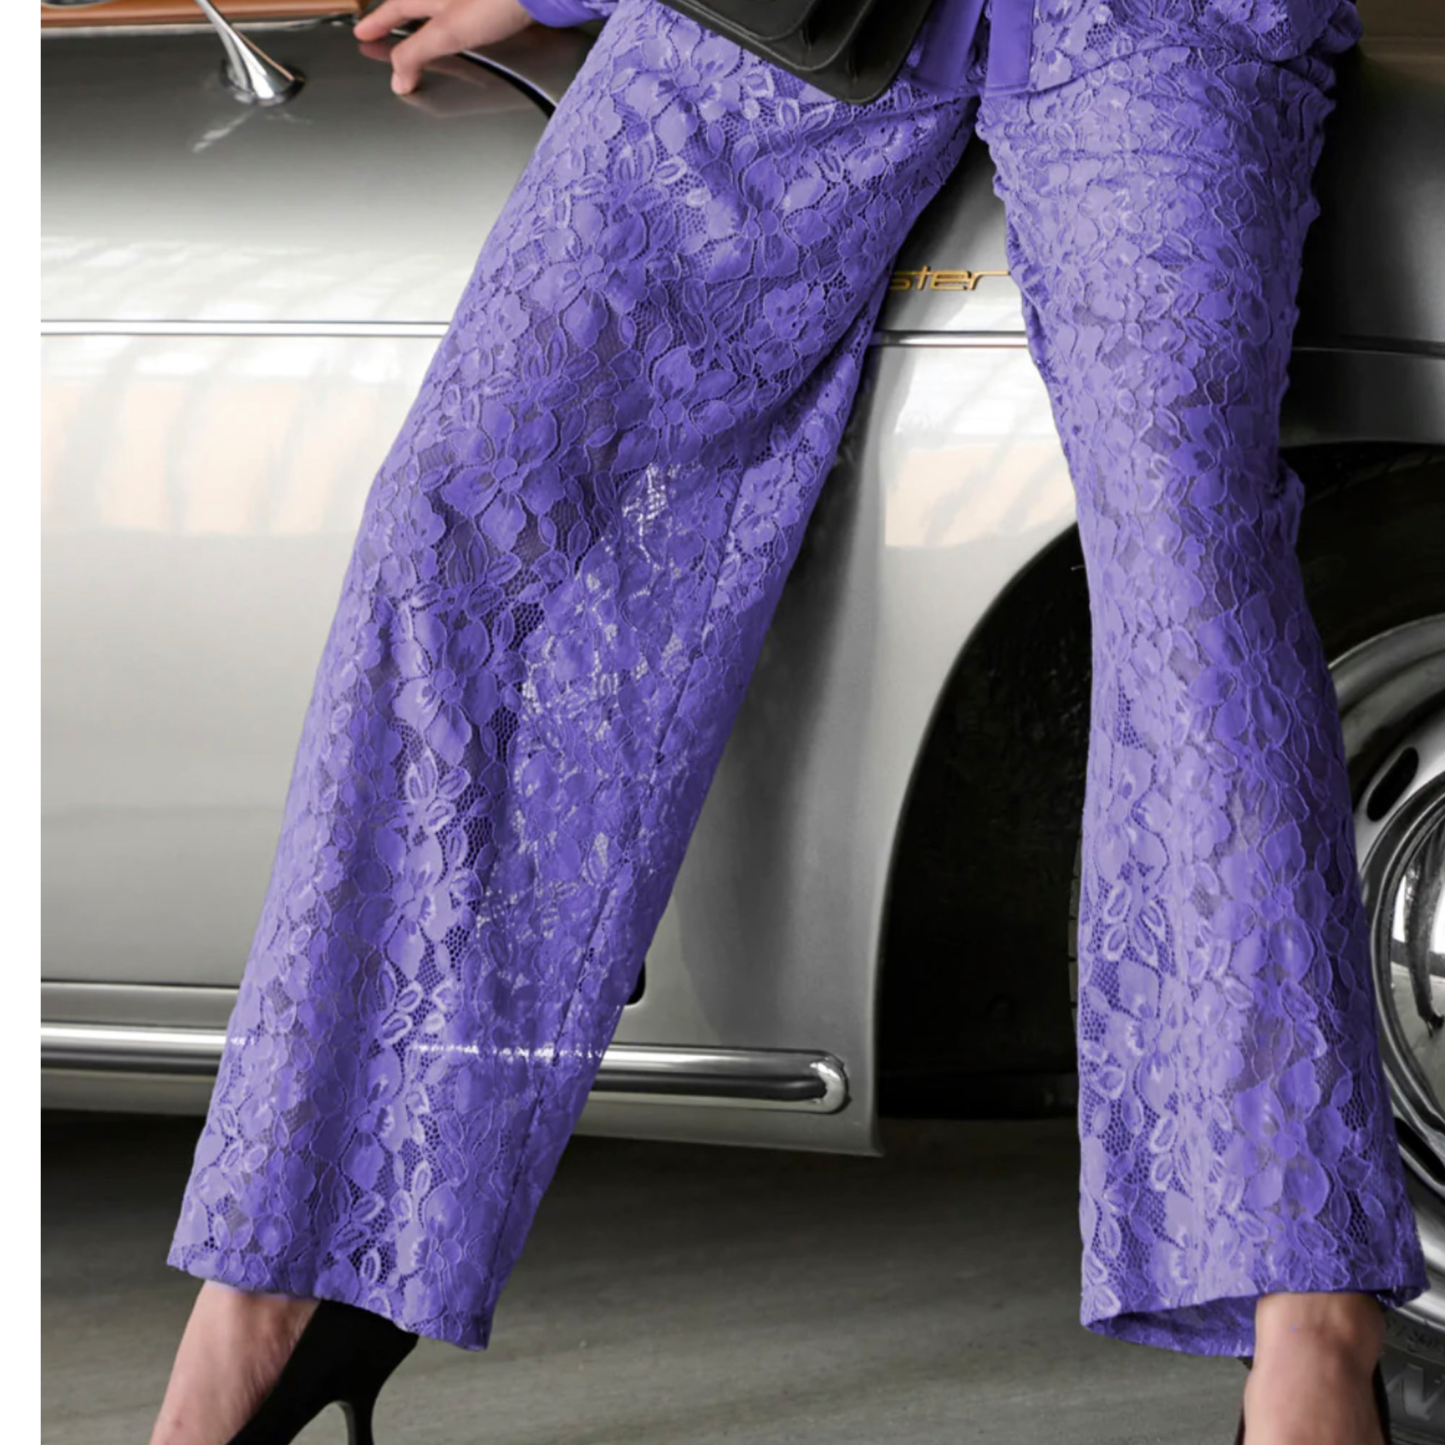 Noella - Bristol Lace pants - Lilac